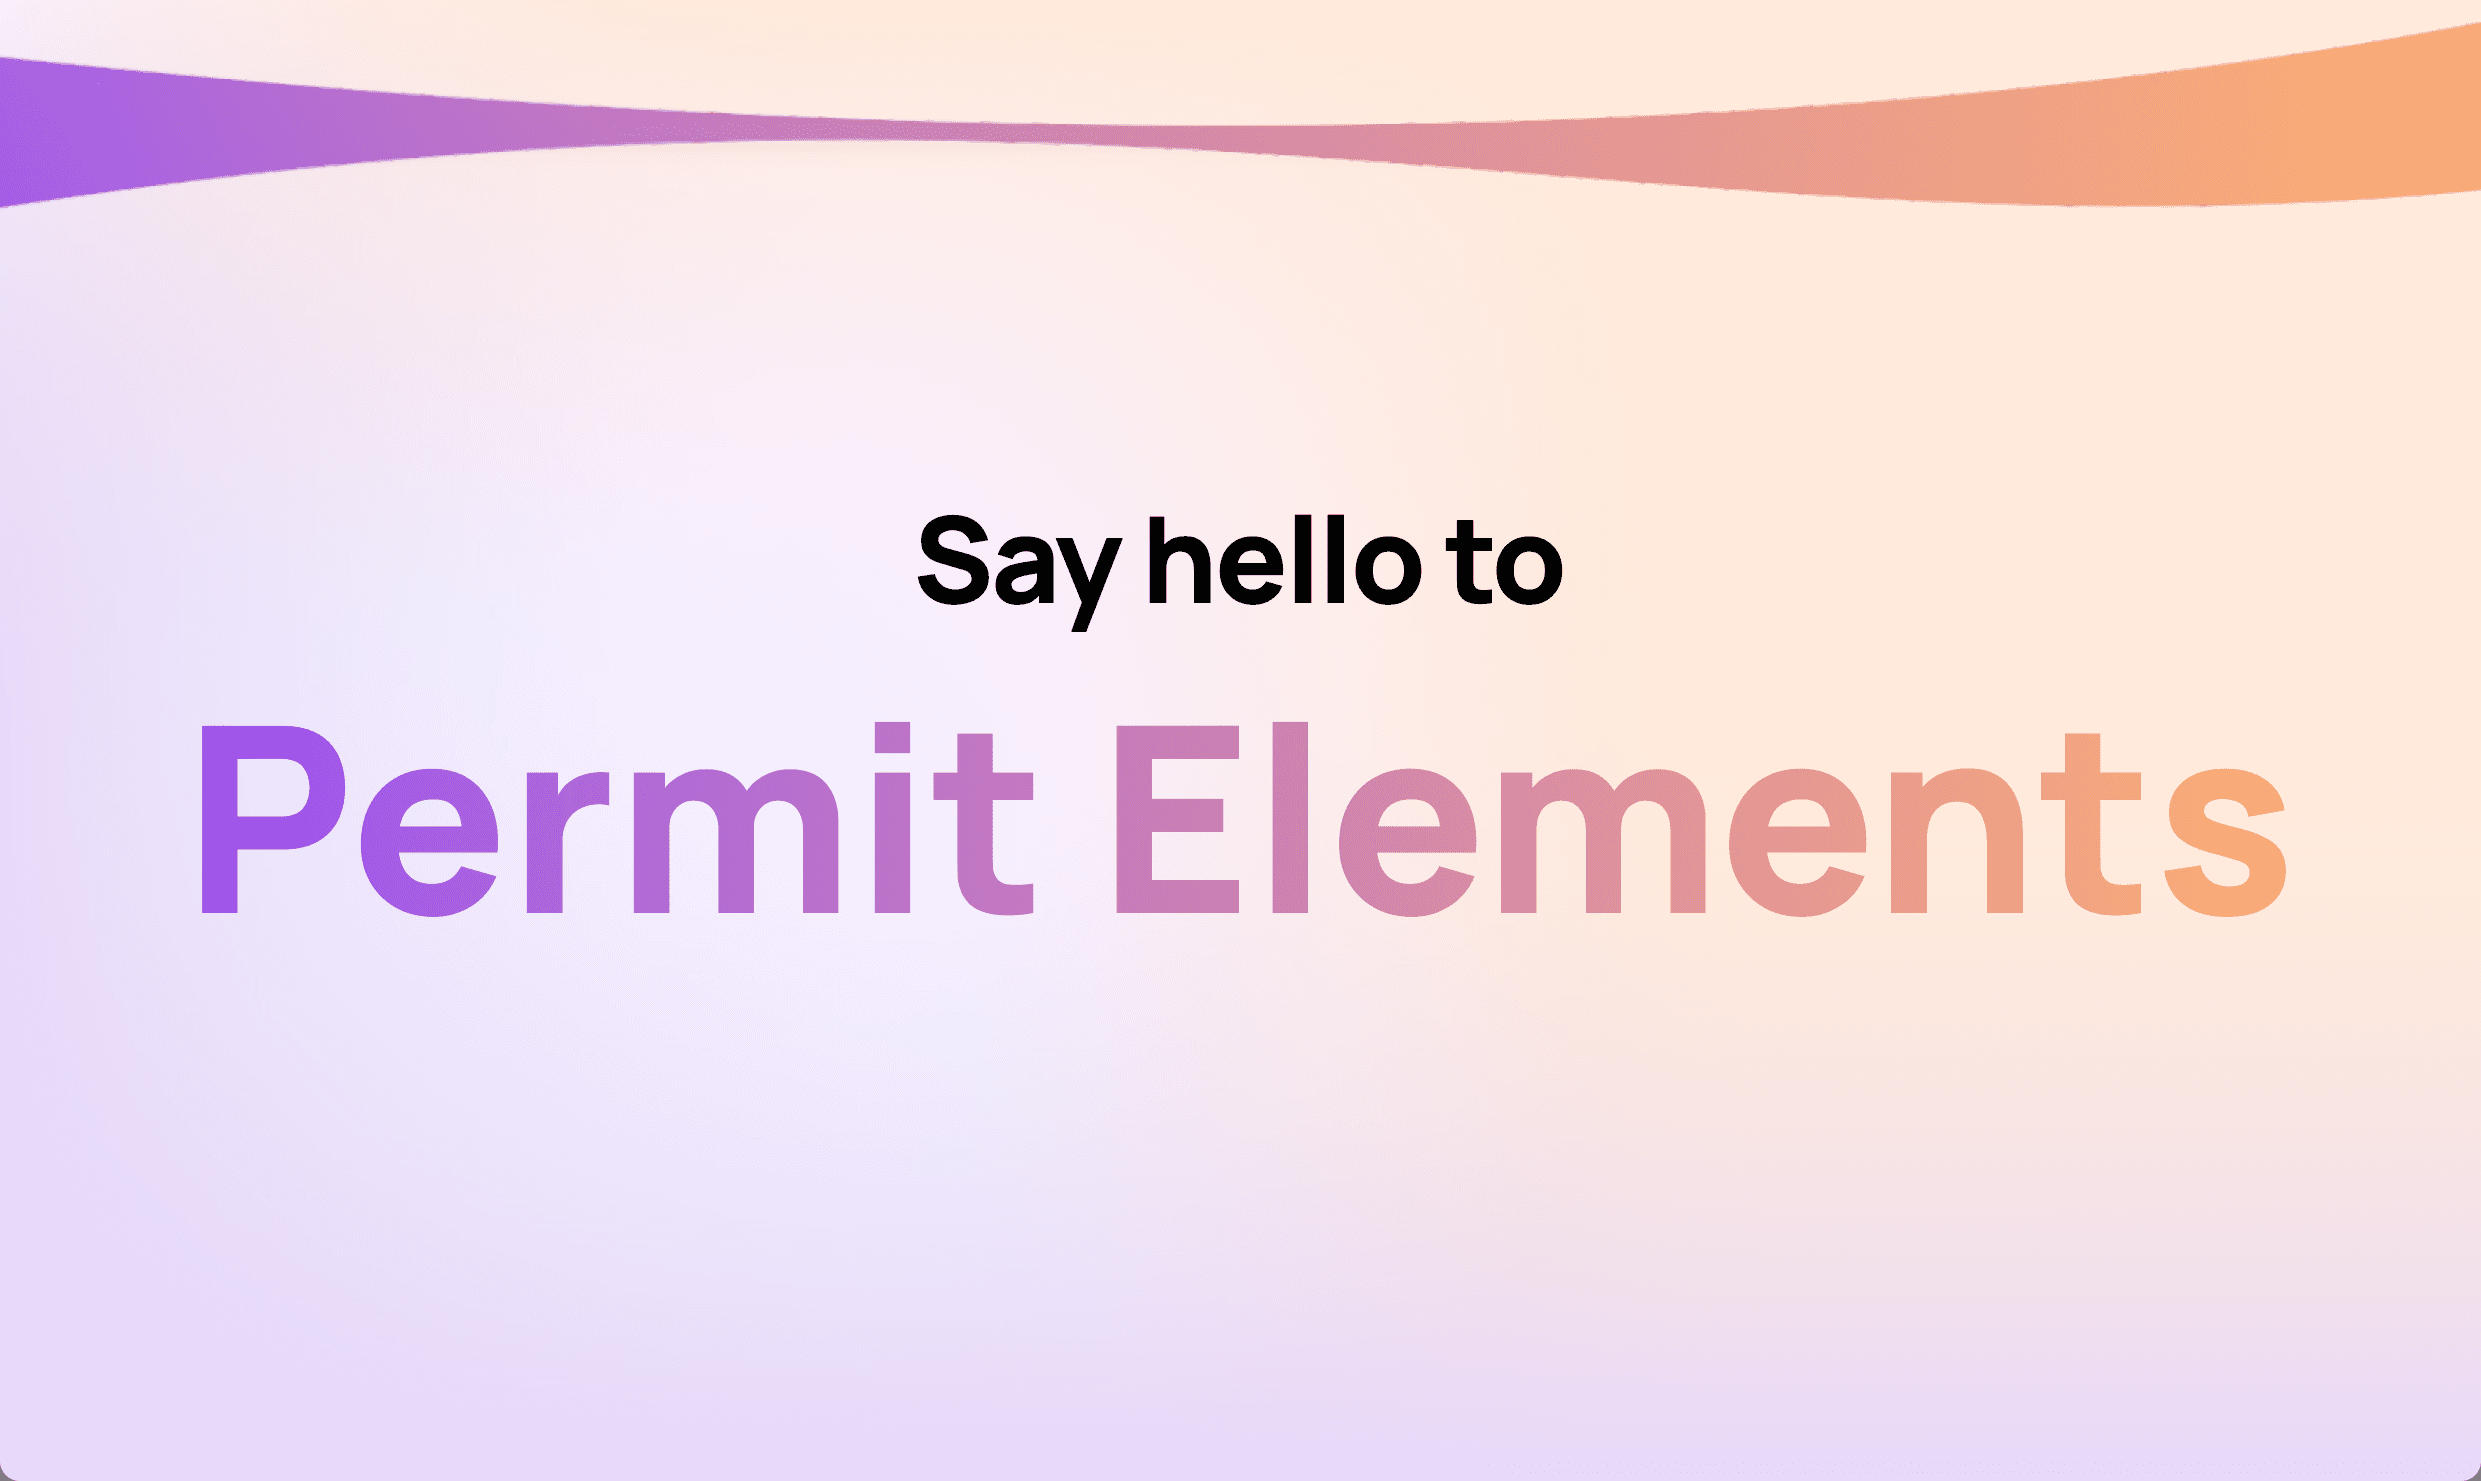 Permit Elements